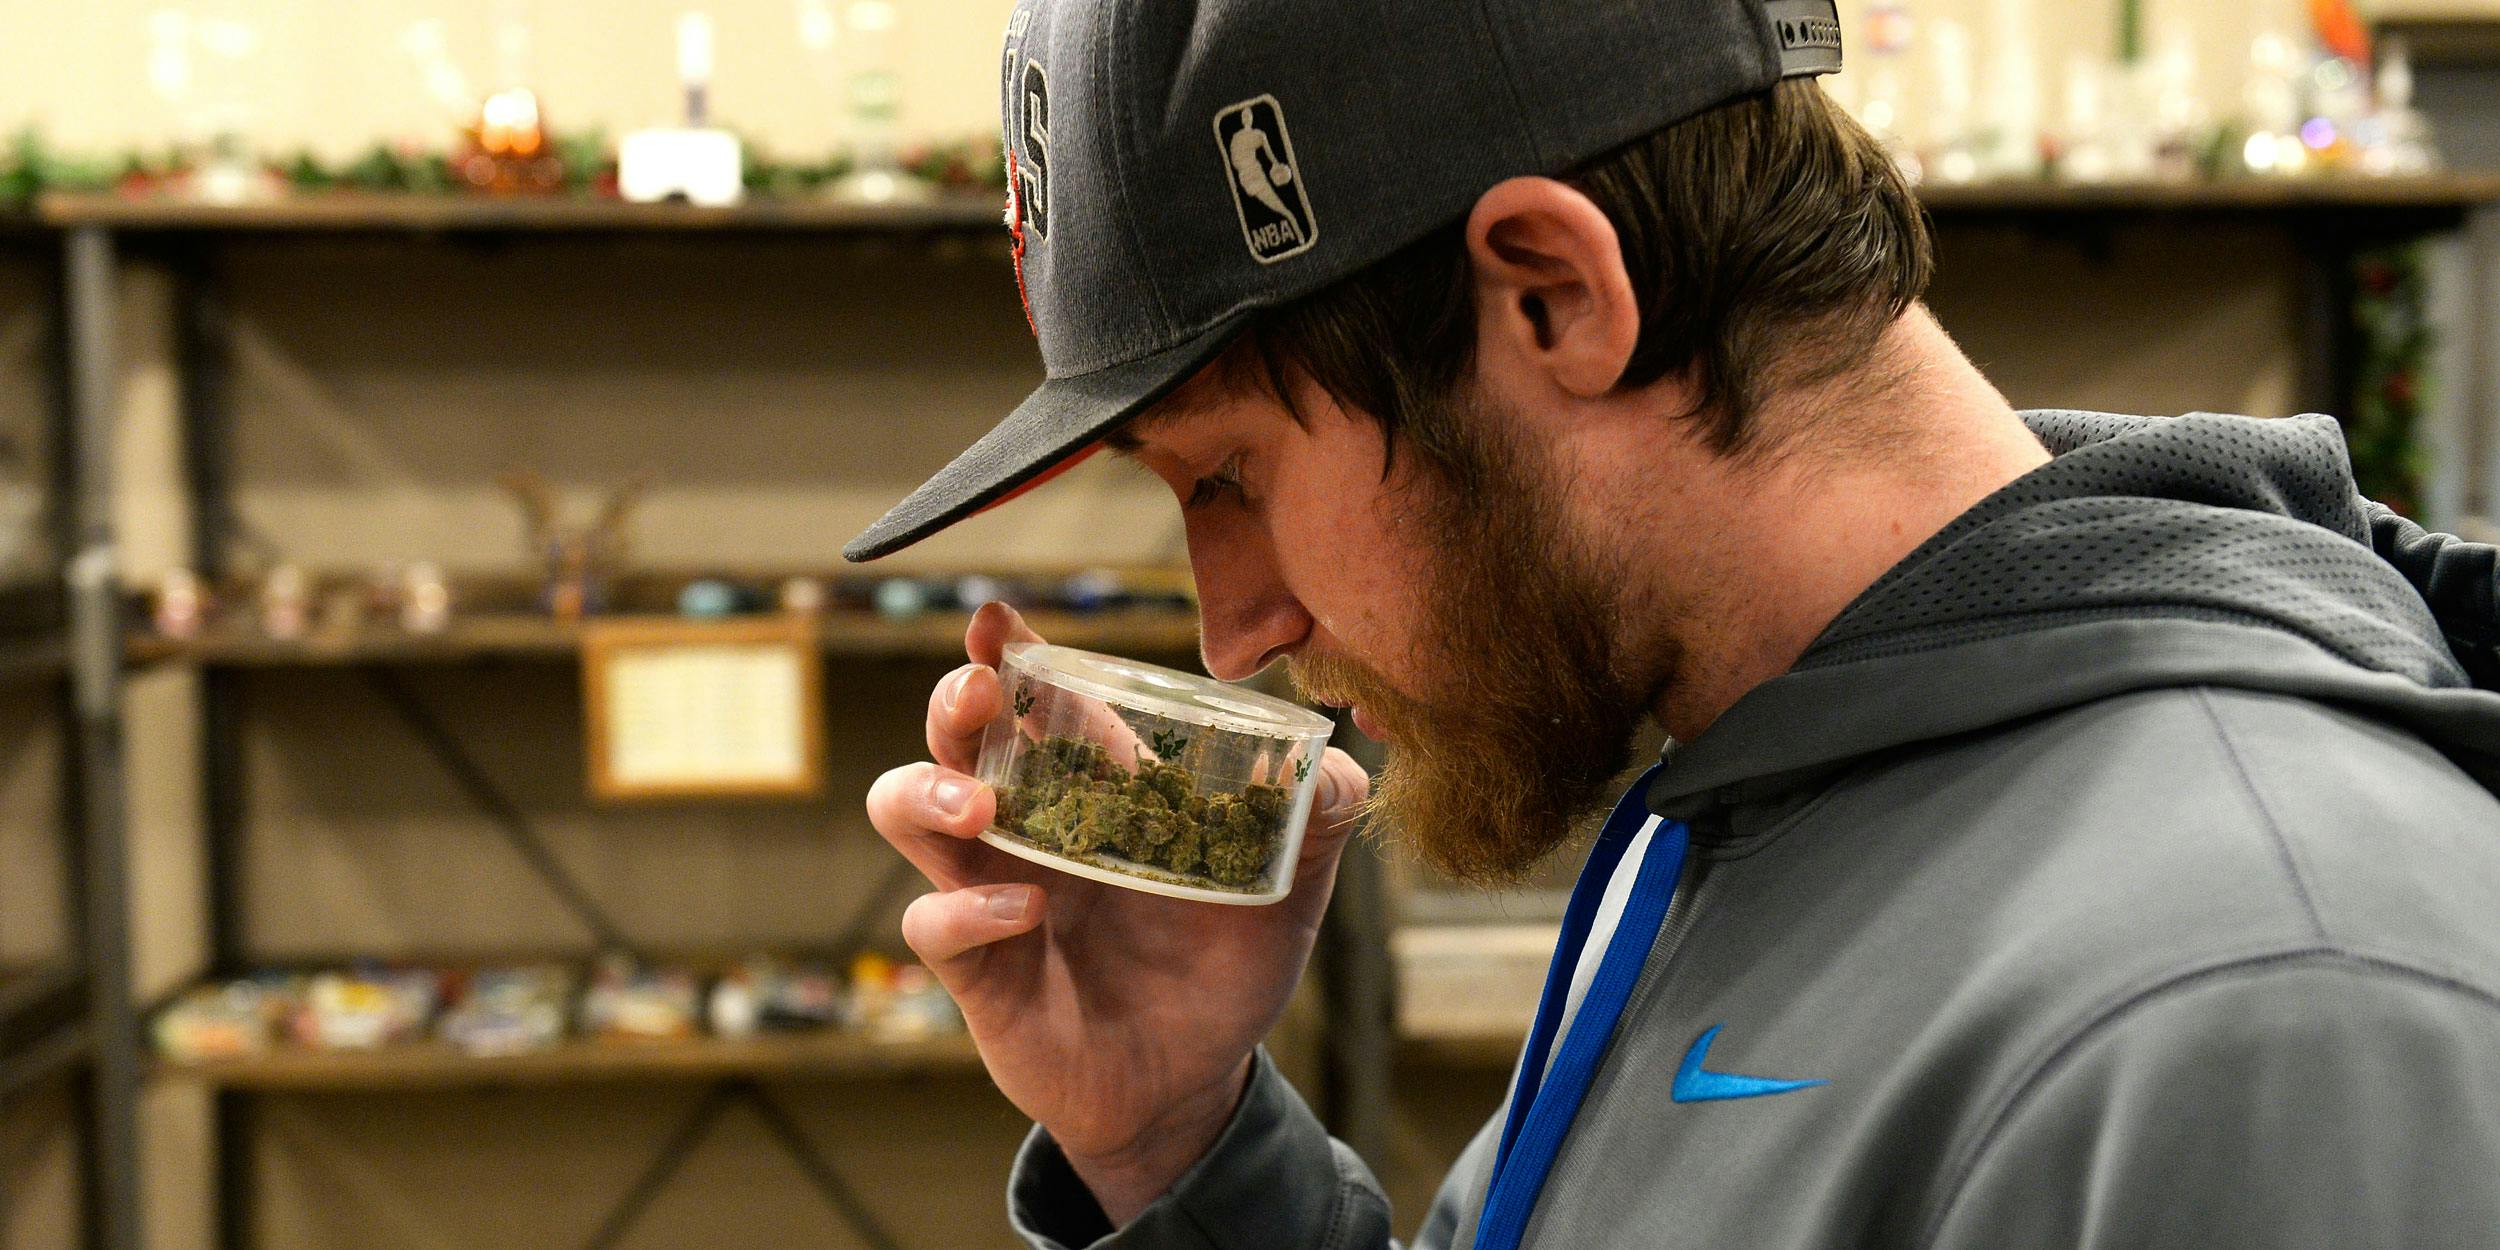 Man sniffs cannabis sample at first retail shop in Massachusetts